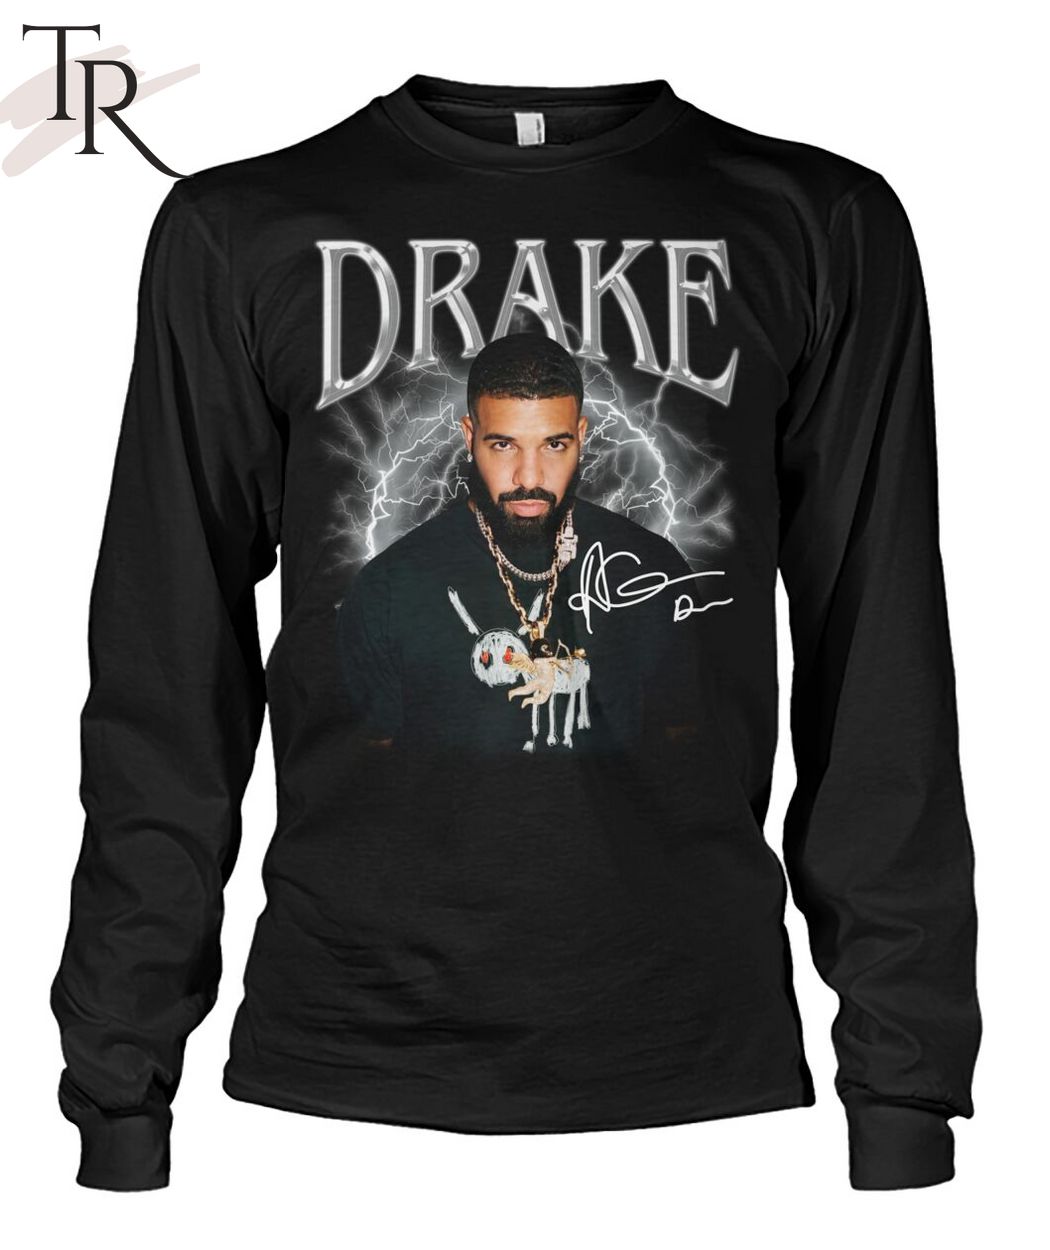 Drake Signature Limited Edition T-Shirt